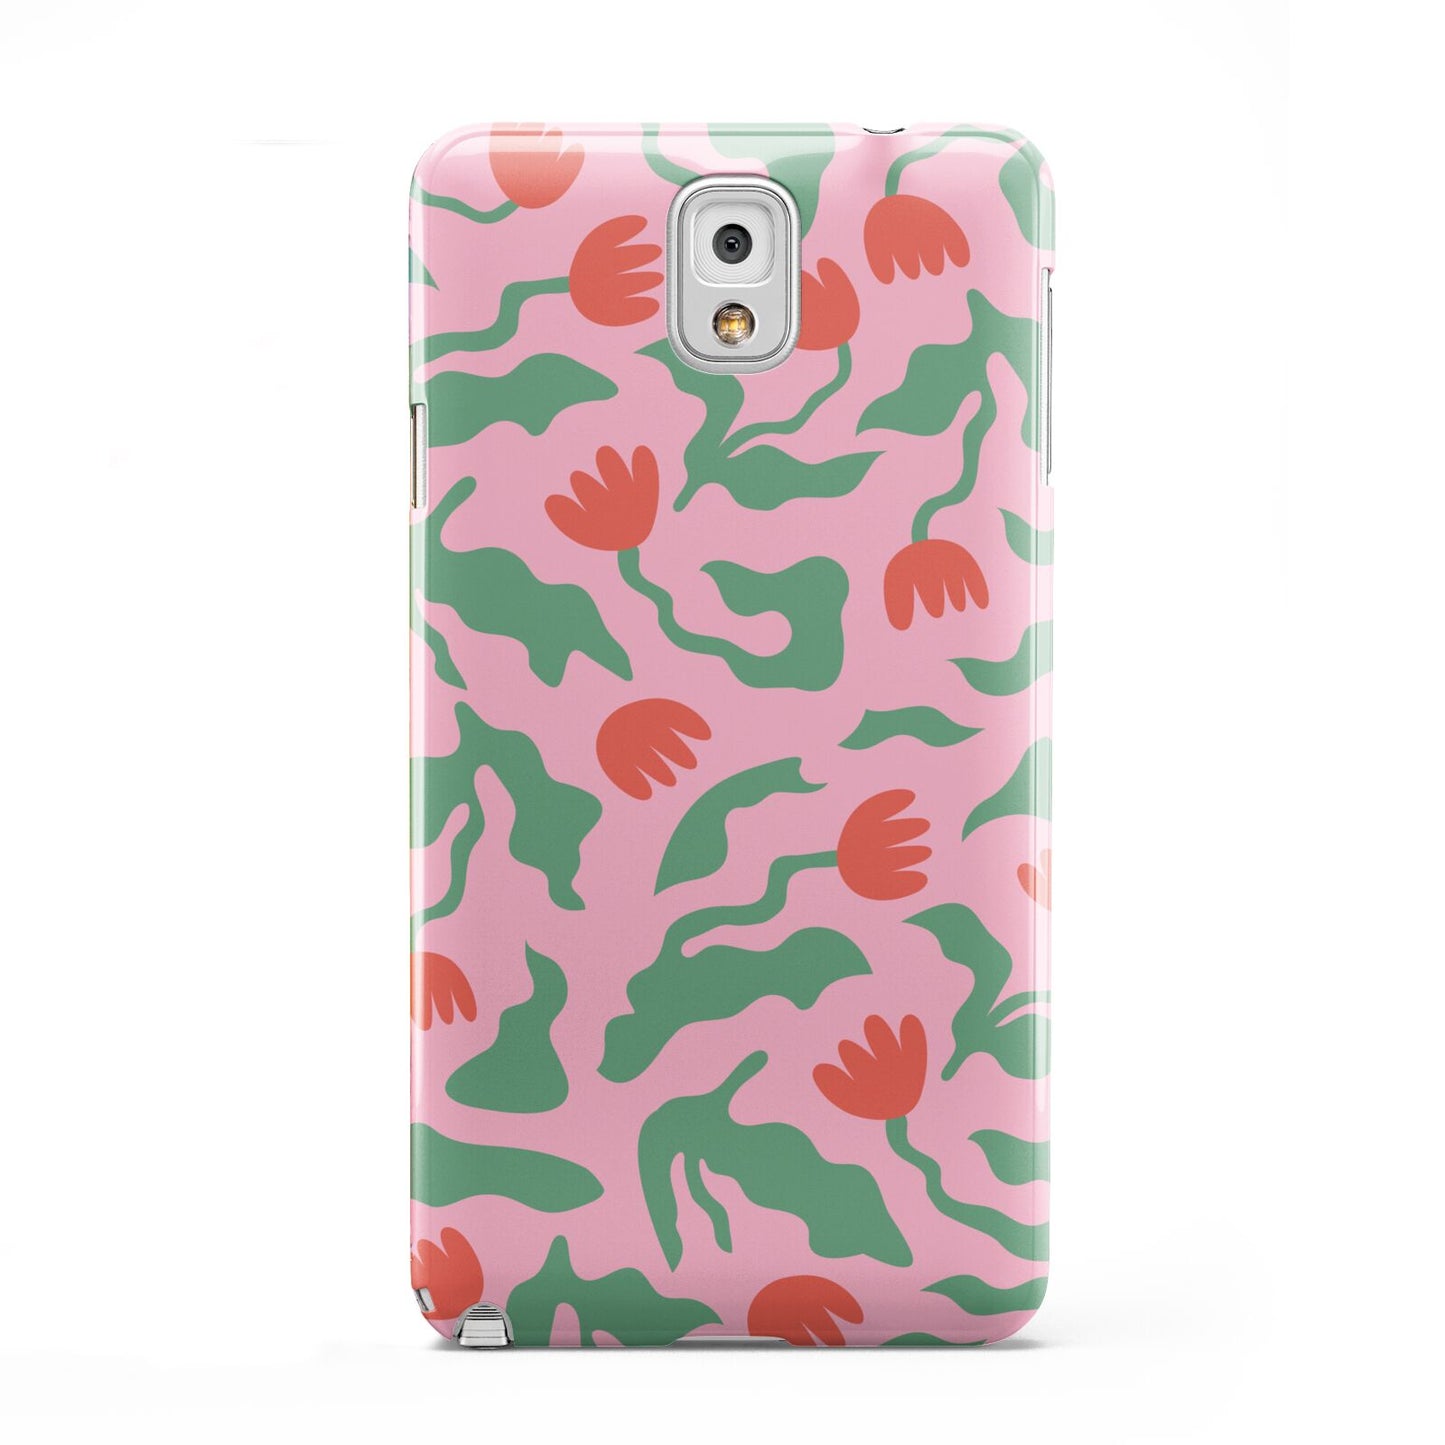 Simple Floral Samsung Galaxy Note 3 Case